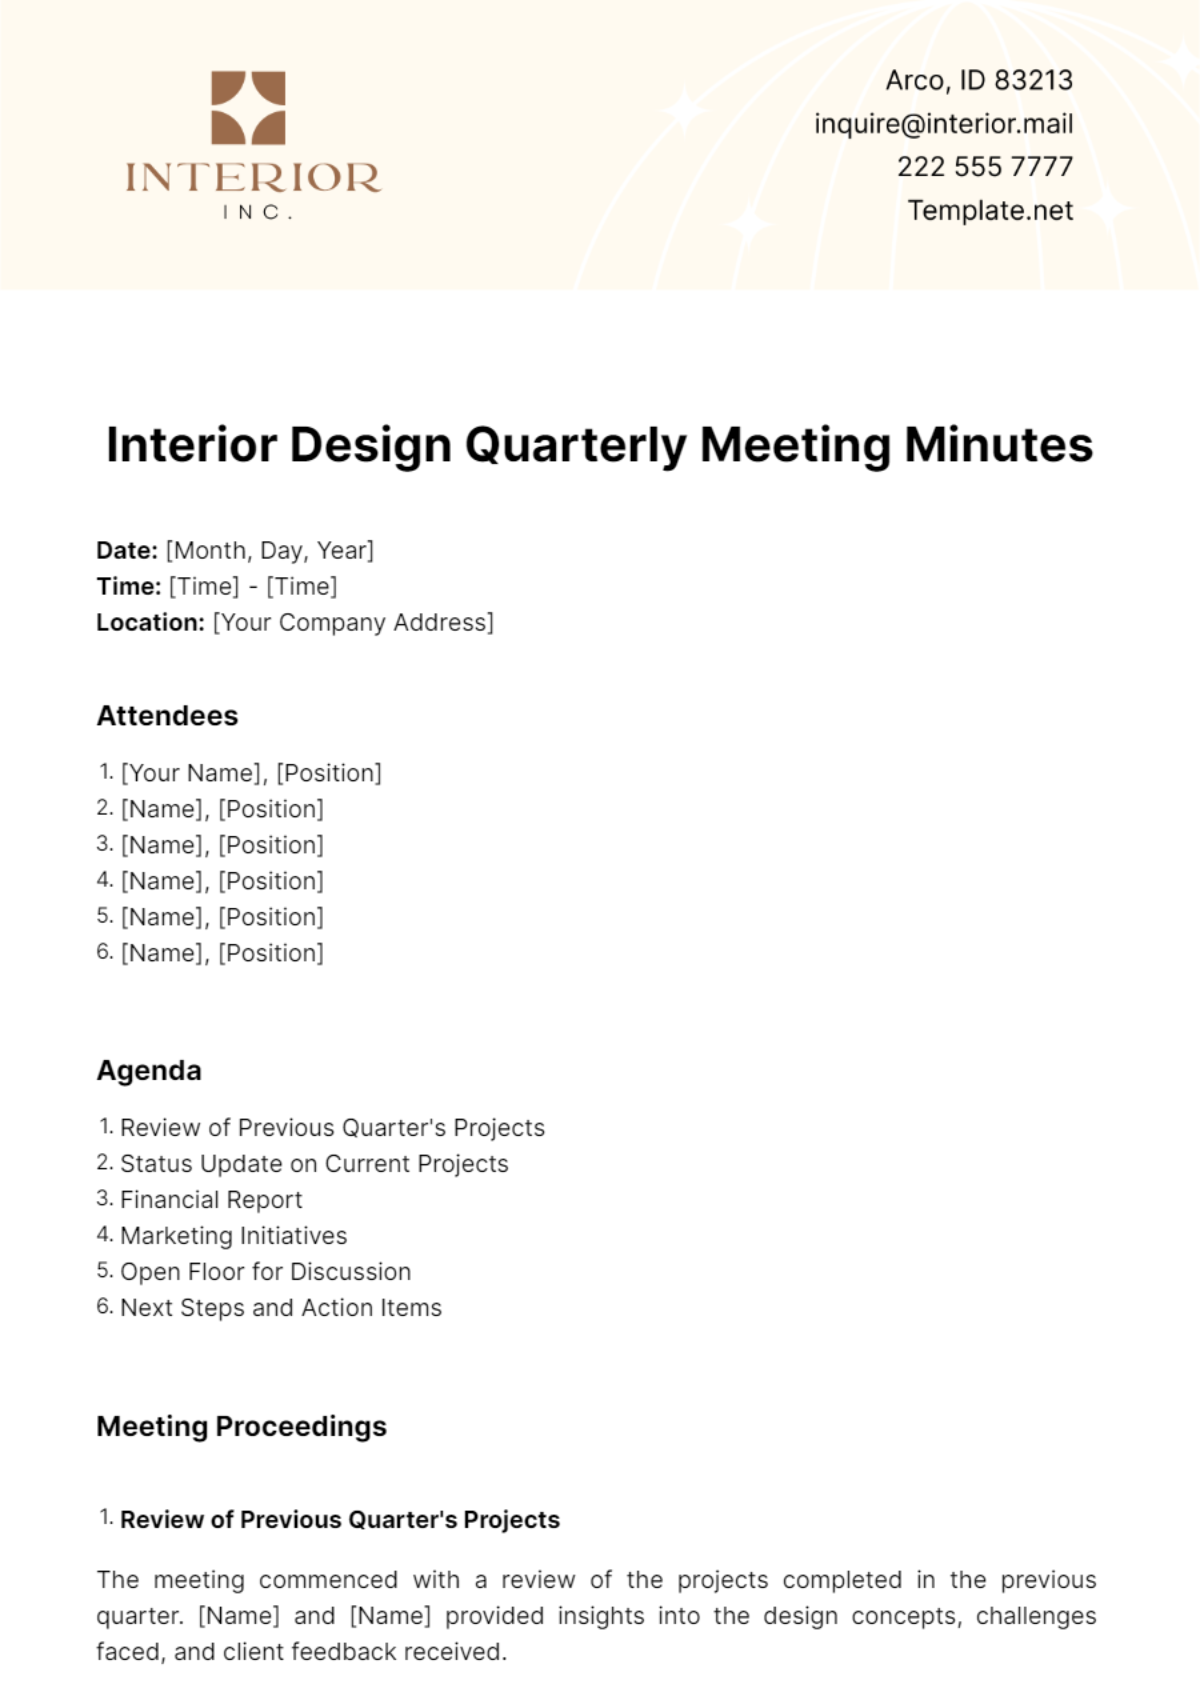 Interior Design Quarterly Meeting Minutes Template